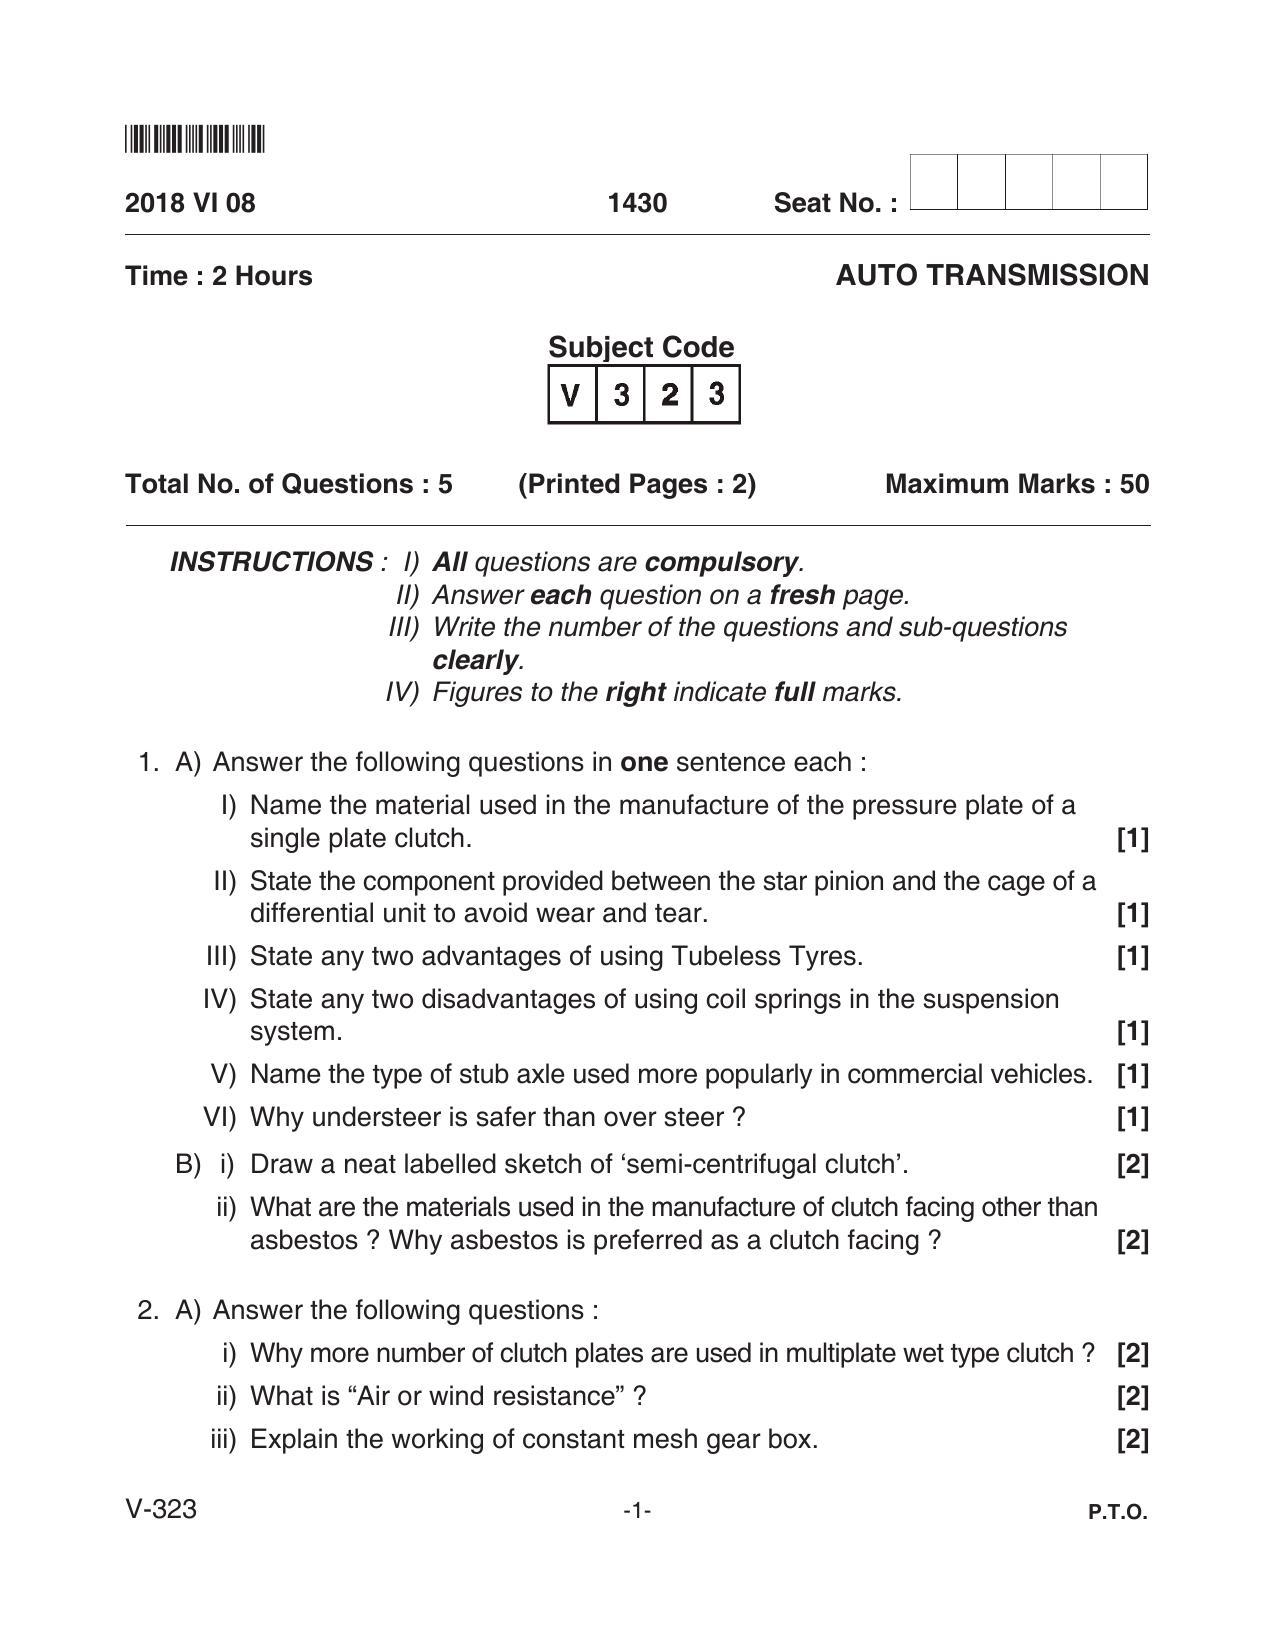 Goa Board Class 12 Auto - Transmission  Voc 323 (June 2018) Question Paper - Page 1